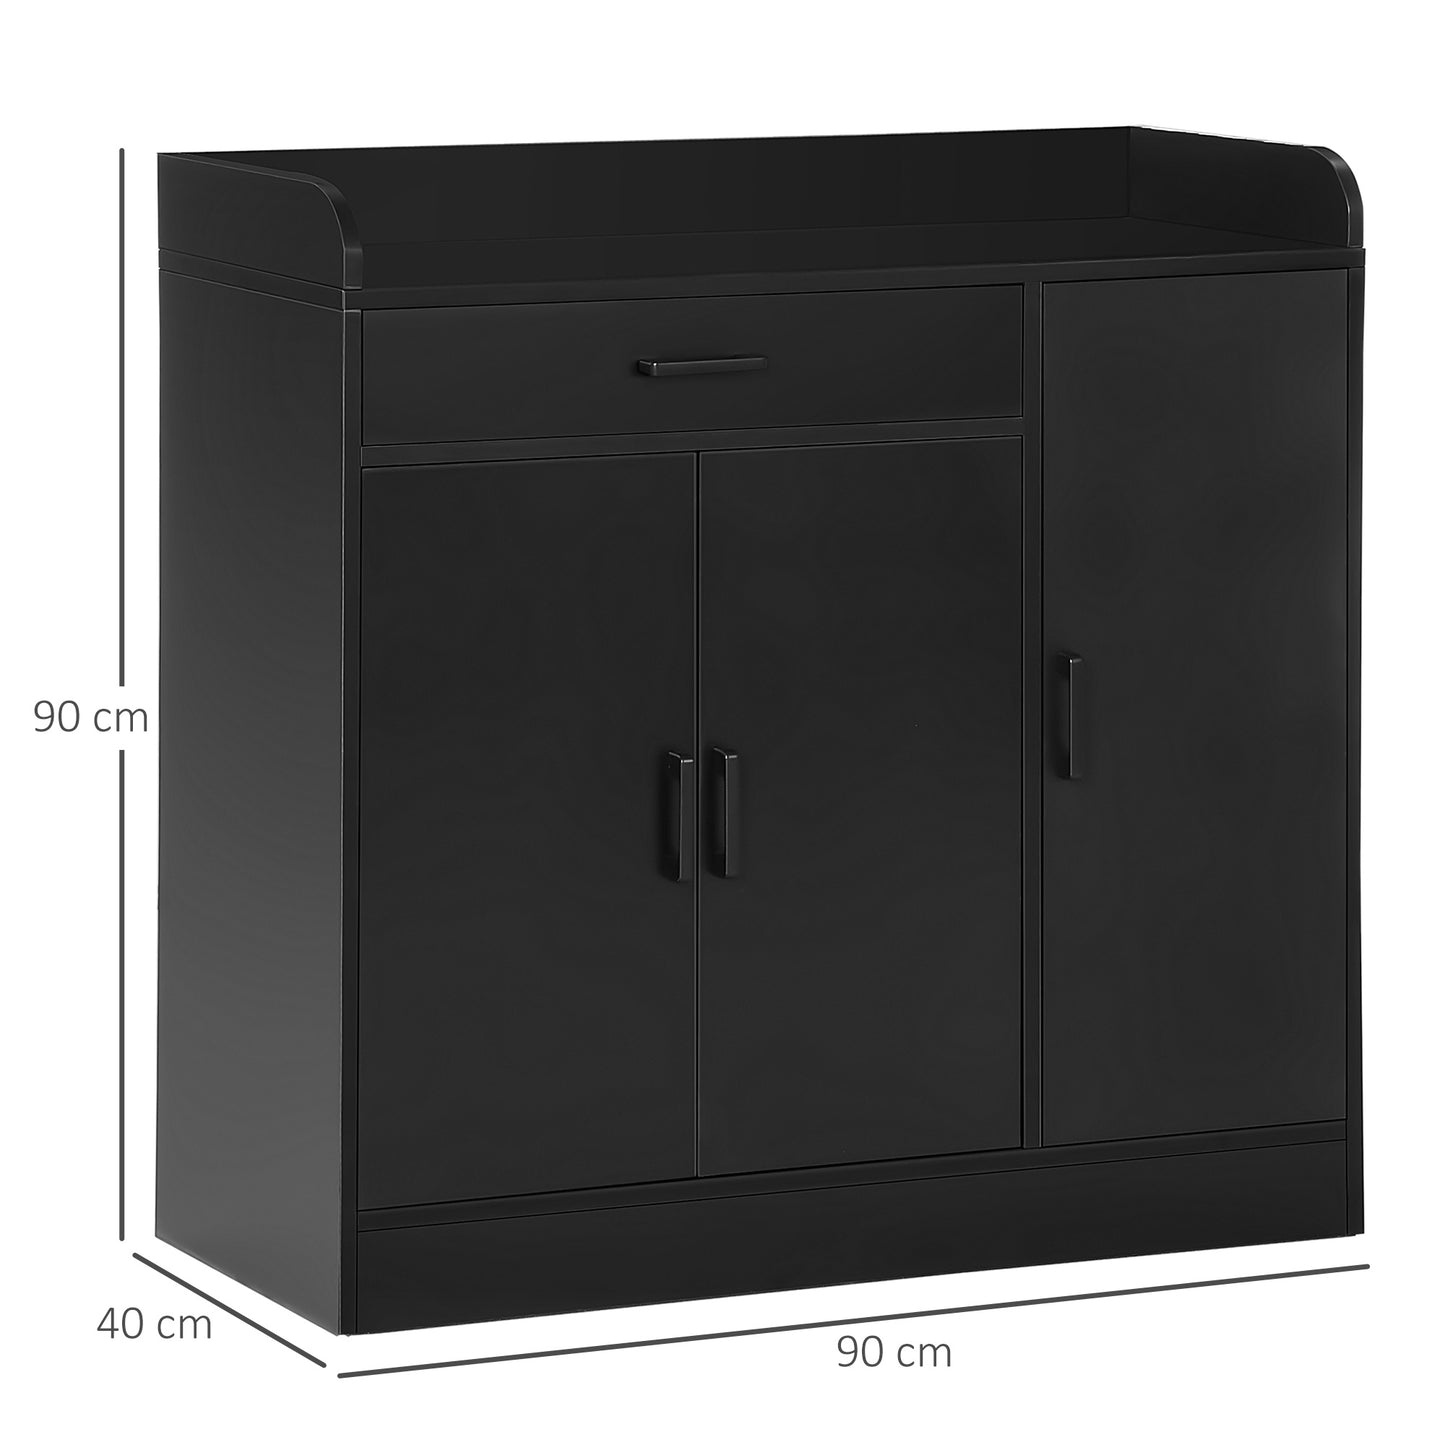 HOMCOM Modern Sideboard with Storage Cabinet, Floor Cupboard with Drawer for Living Room, Bedroom, Hallway, Black